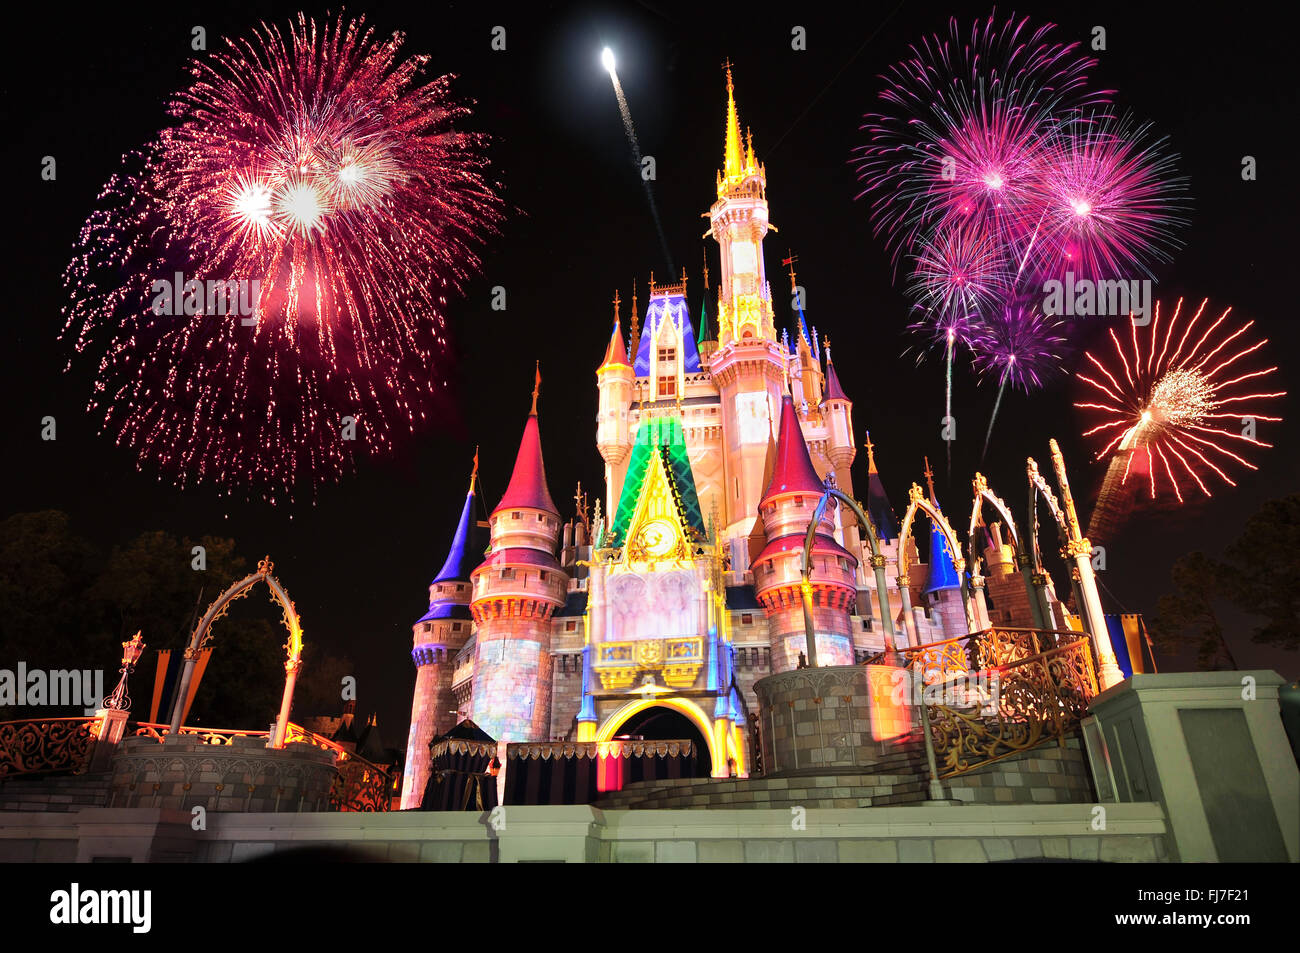 Display of fireworks and colorful lights on Cinderella's Castle in Magic Kingdom at DisneyWorld, Orlando, Florida USA. Stock Photo